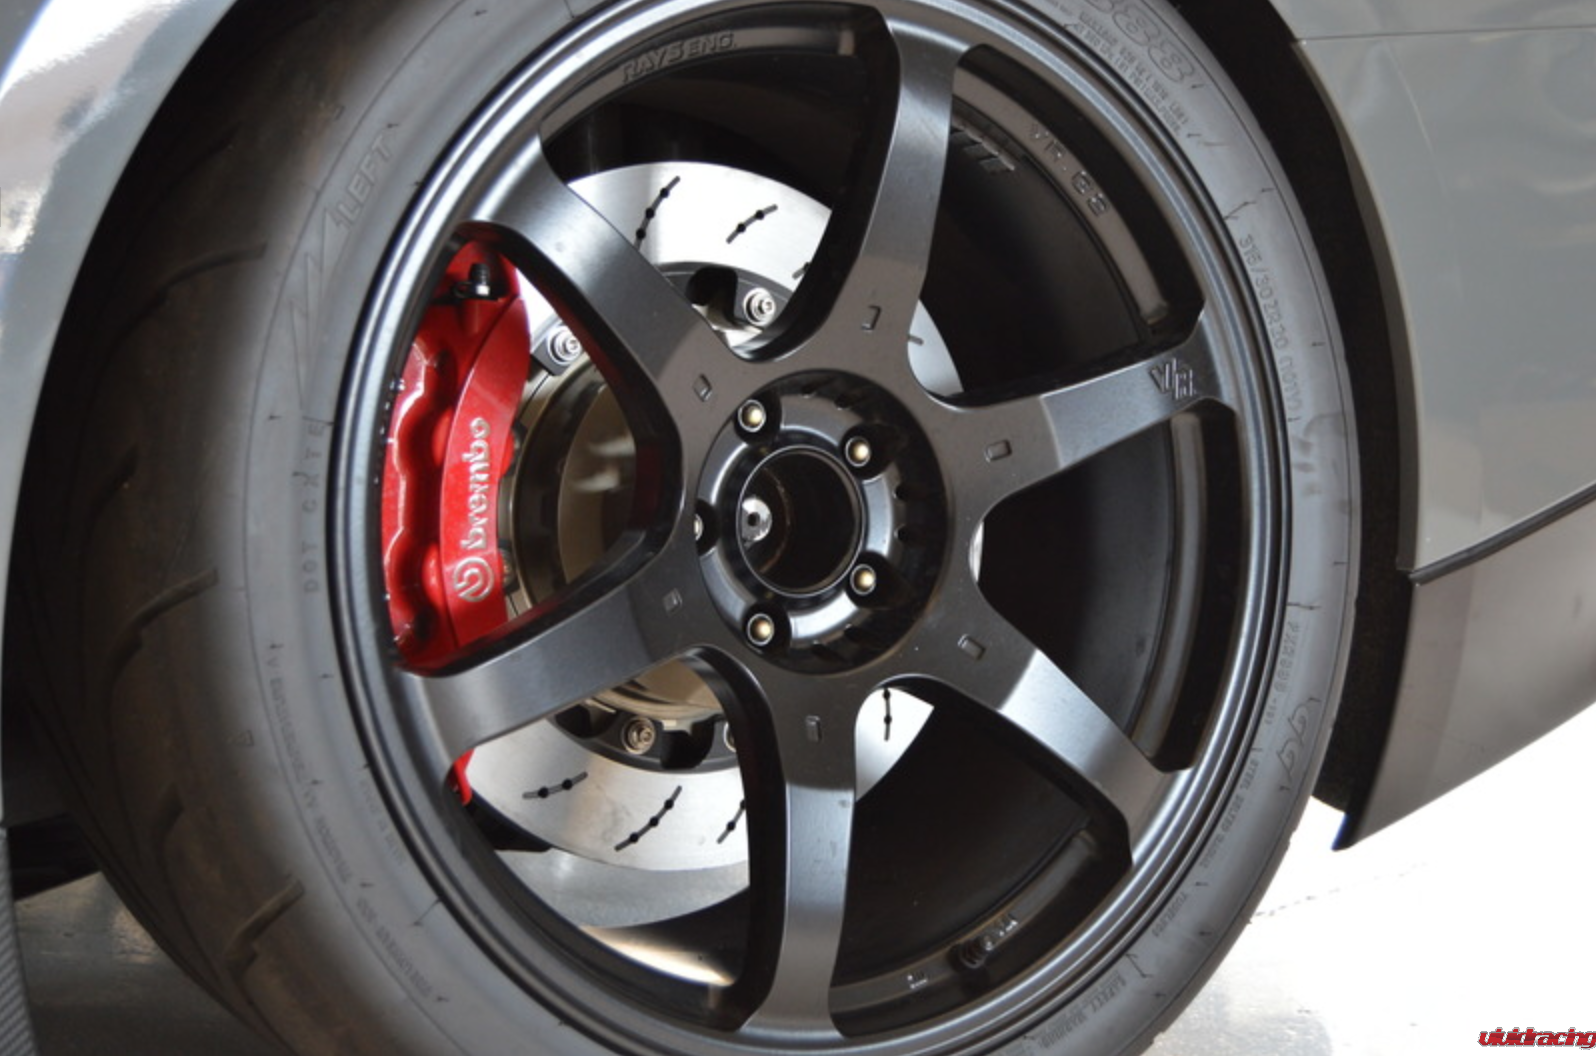 Nissan GTR, WP Pro, brake rotors, calipers, pads, upgrade, track